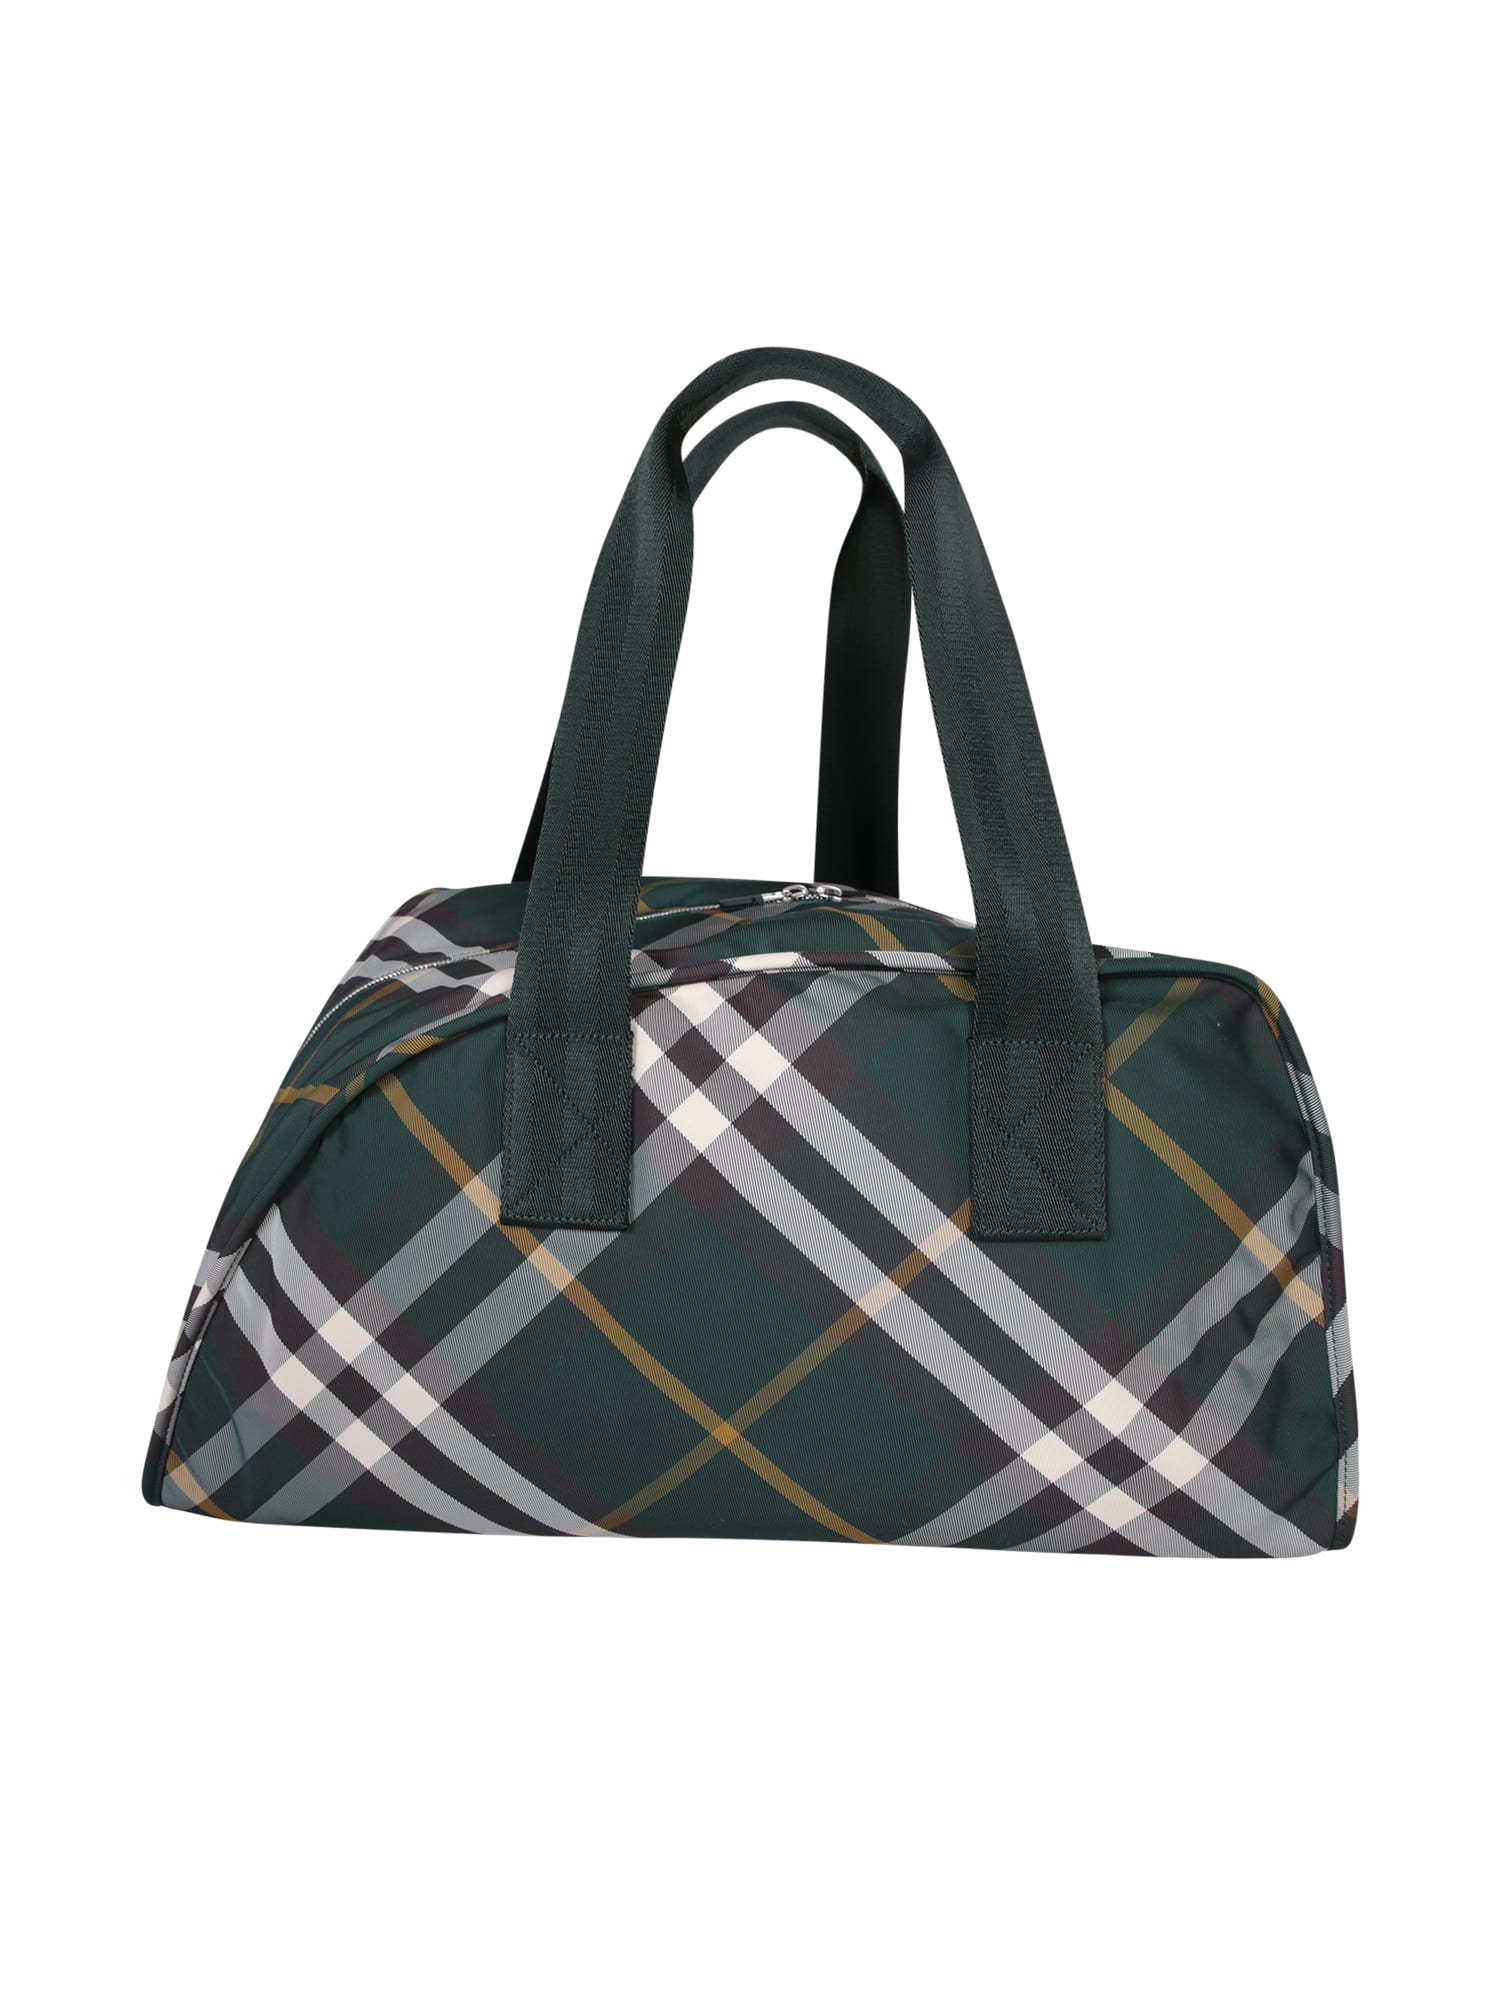 Burberry Shield Duffle Check Green Bag